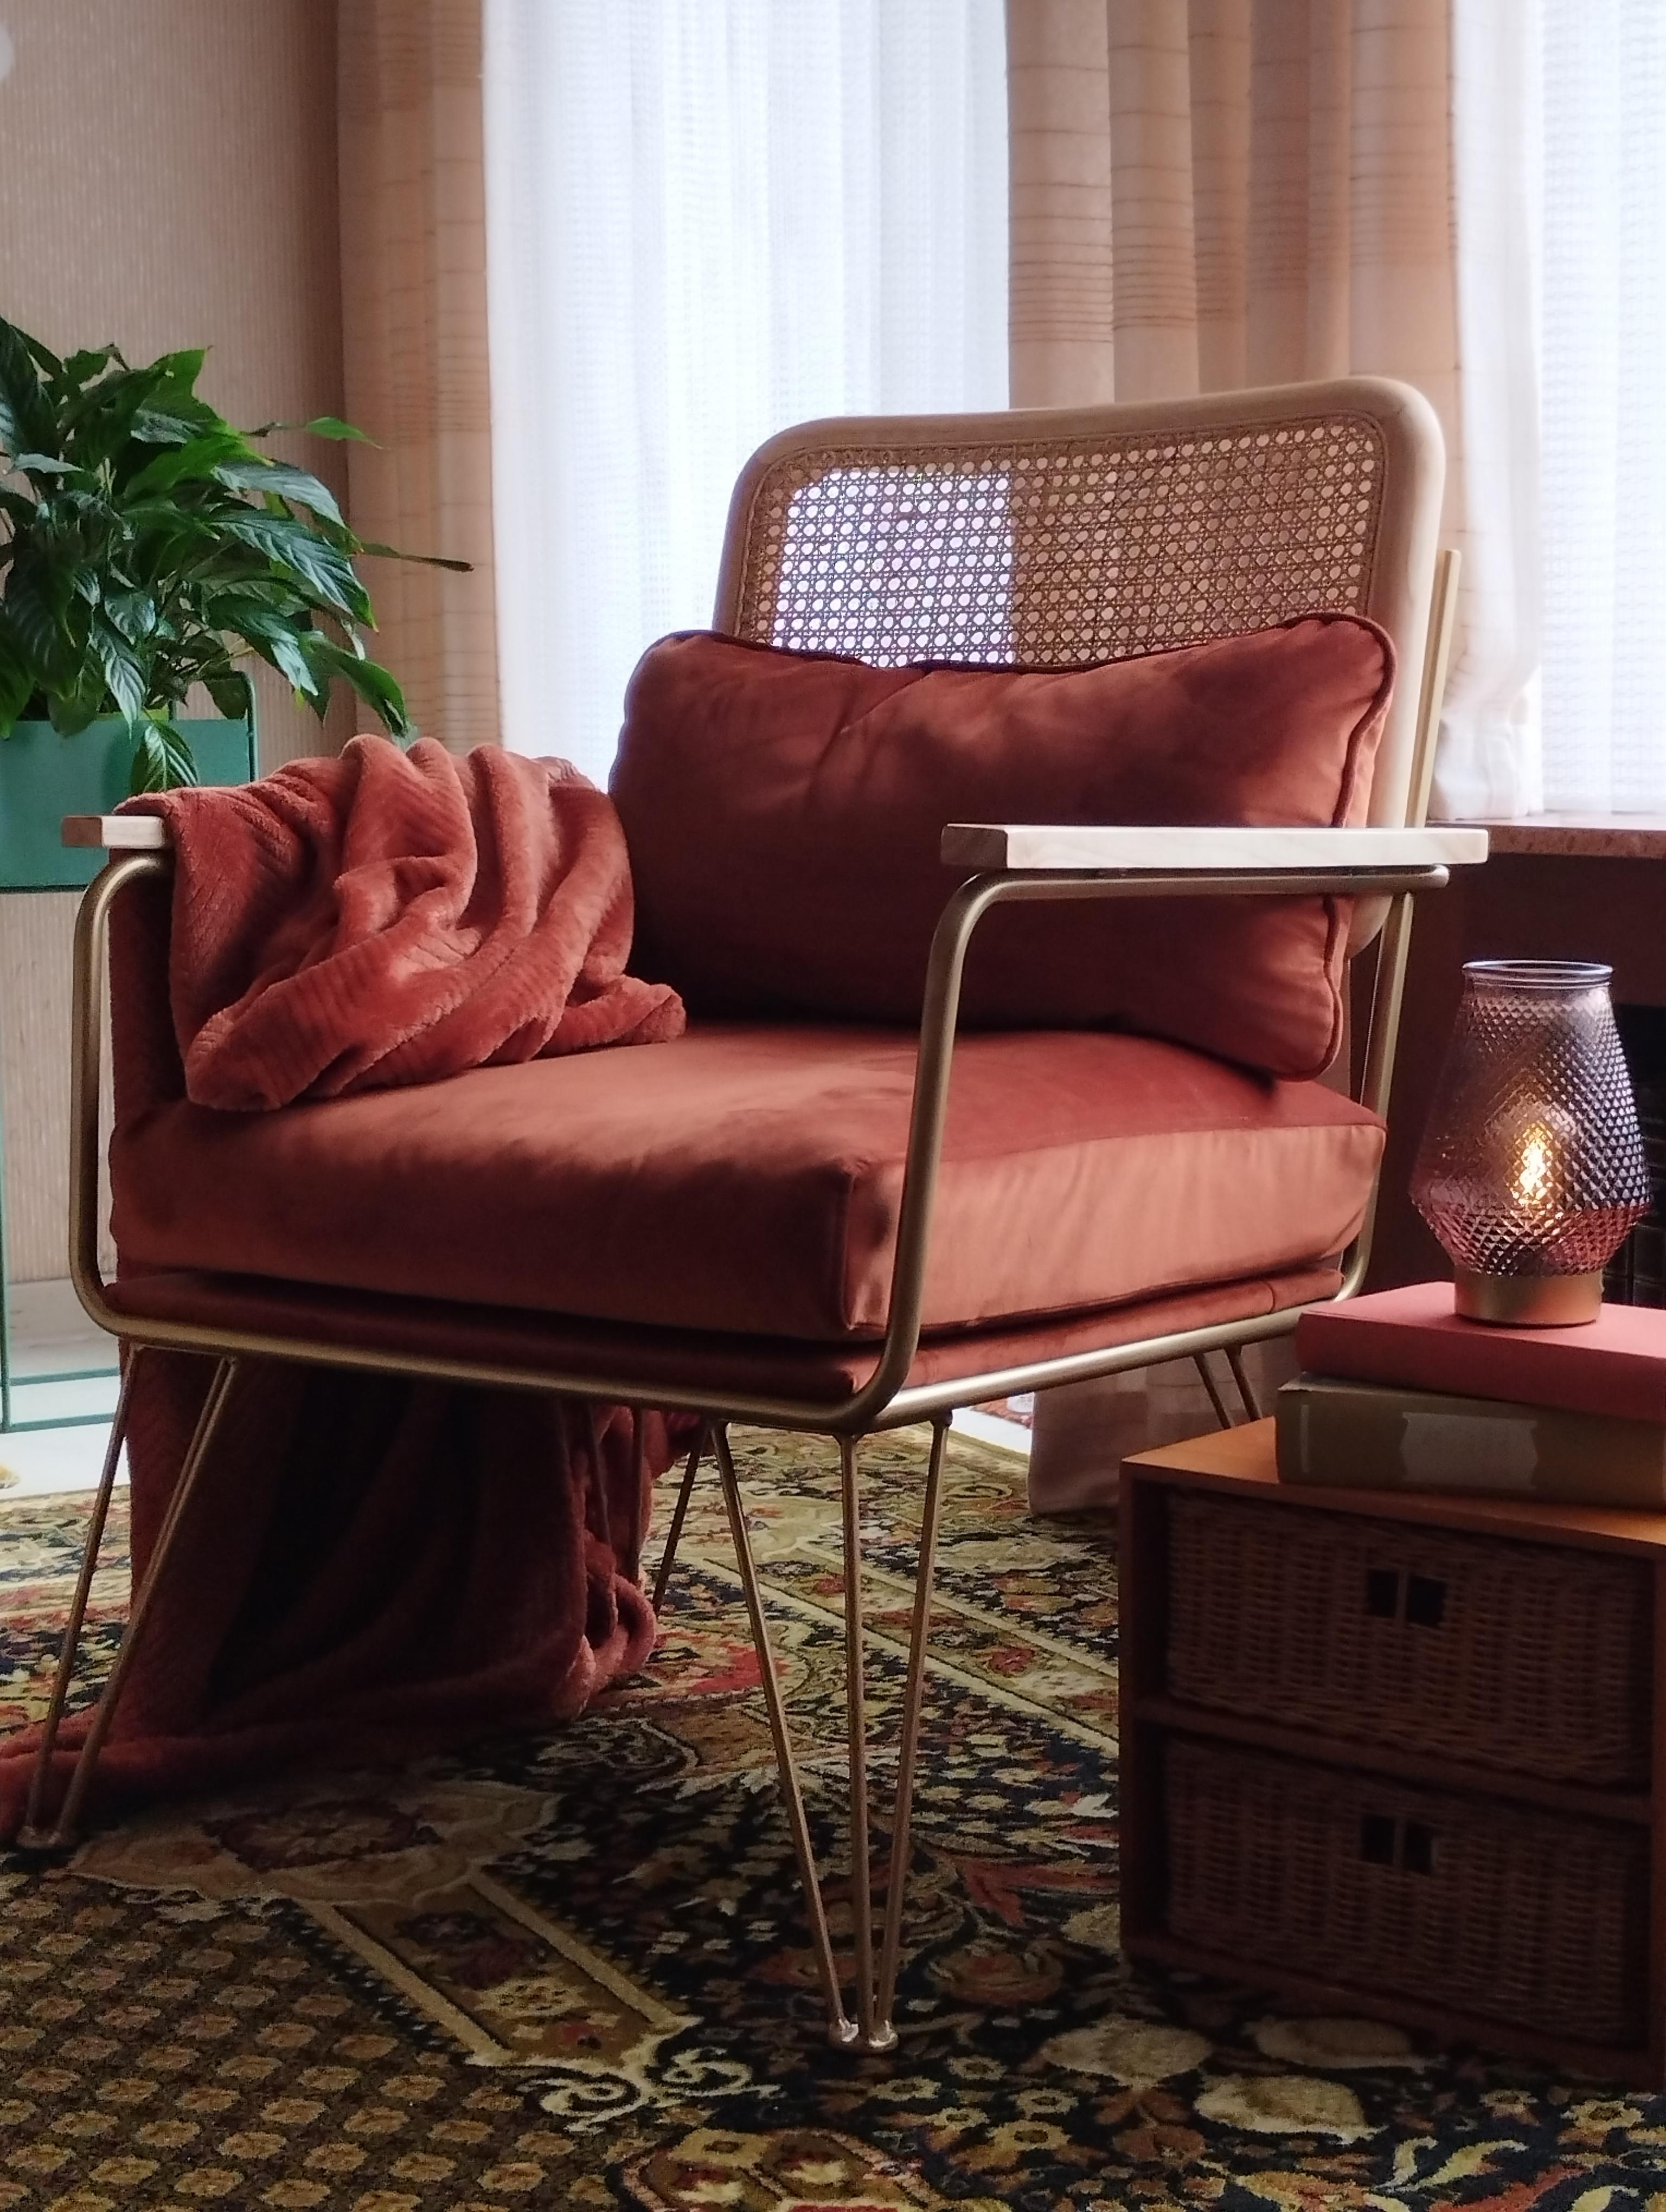 Happy #wohnzimmer ❤️

#livingchallenge #couchstyle
#sesselliebe #vintageliving #vintage